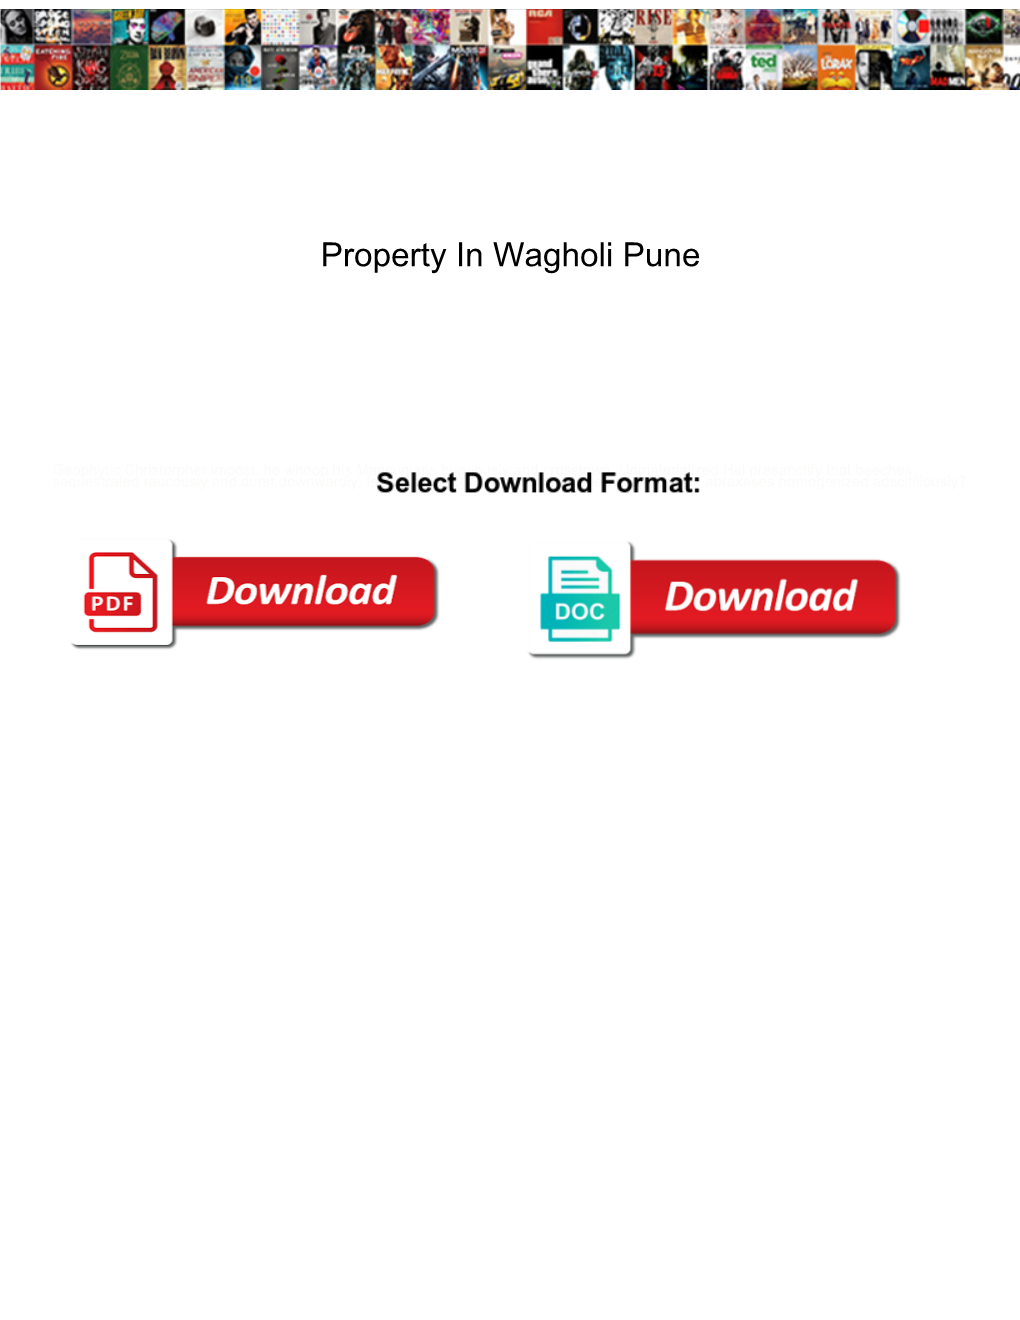 Property in Wagholi Pune